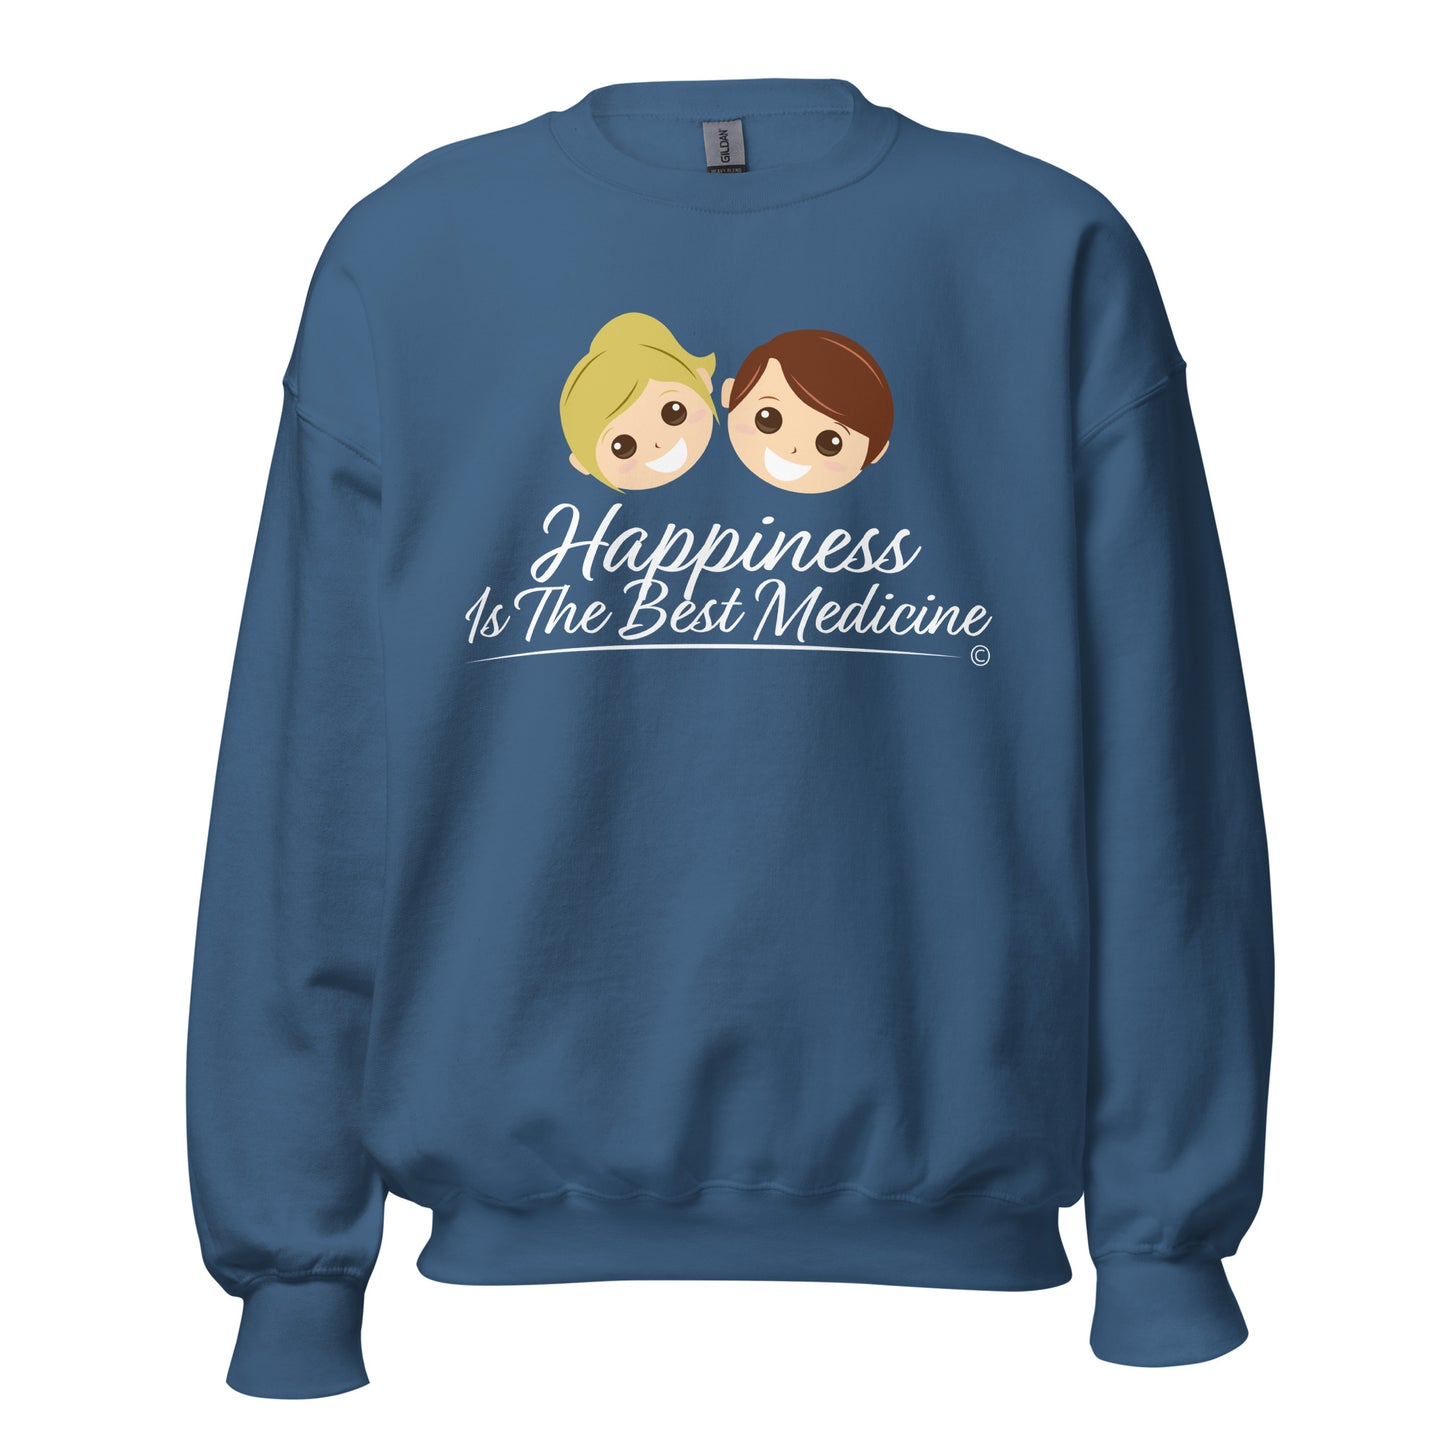 Soft and cozy sweatshirt for all -Indigo Blue